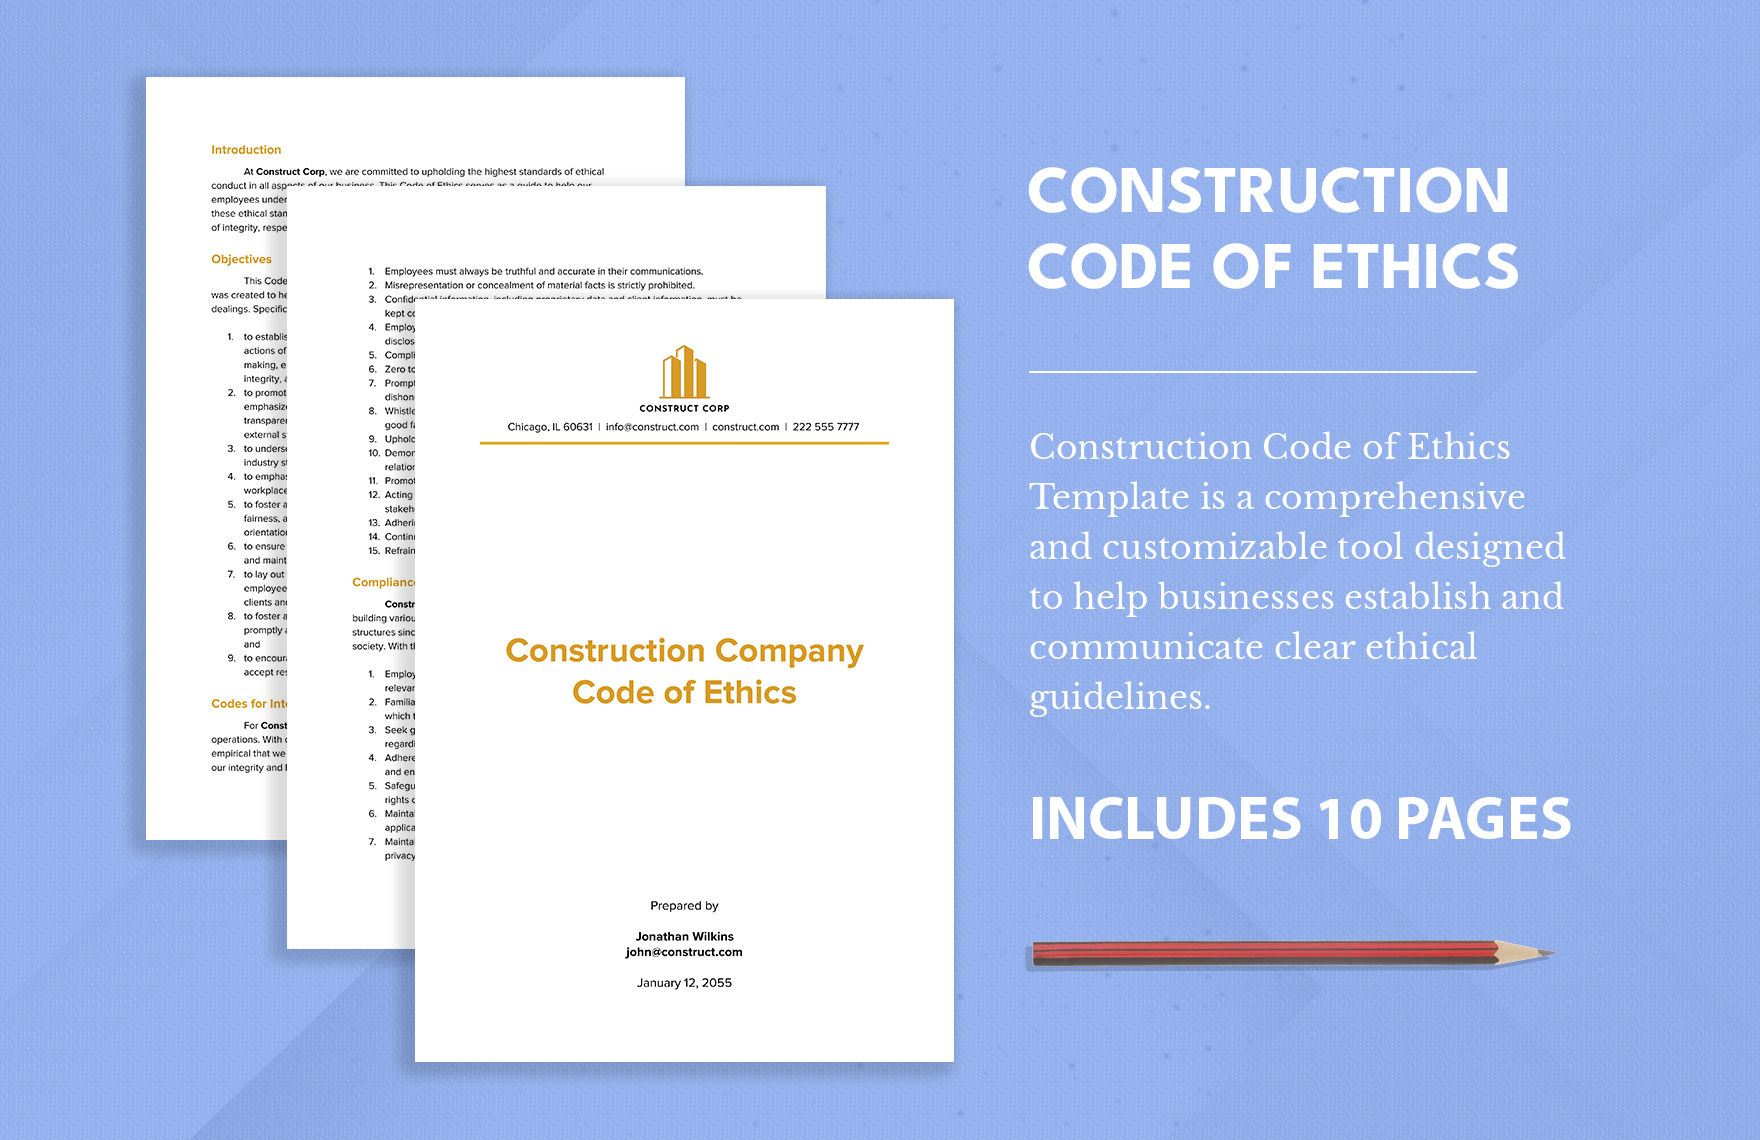 Construction Code of Ethics